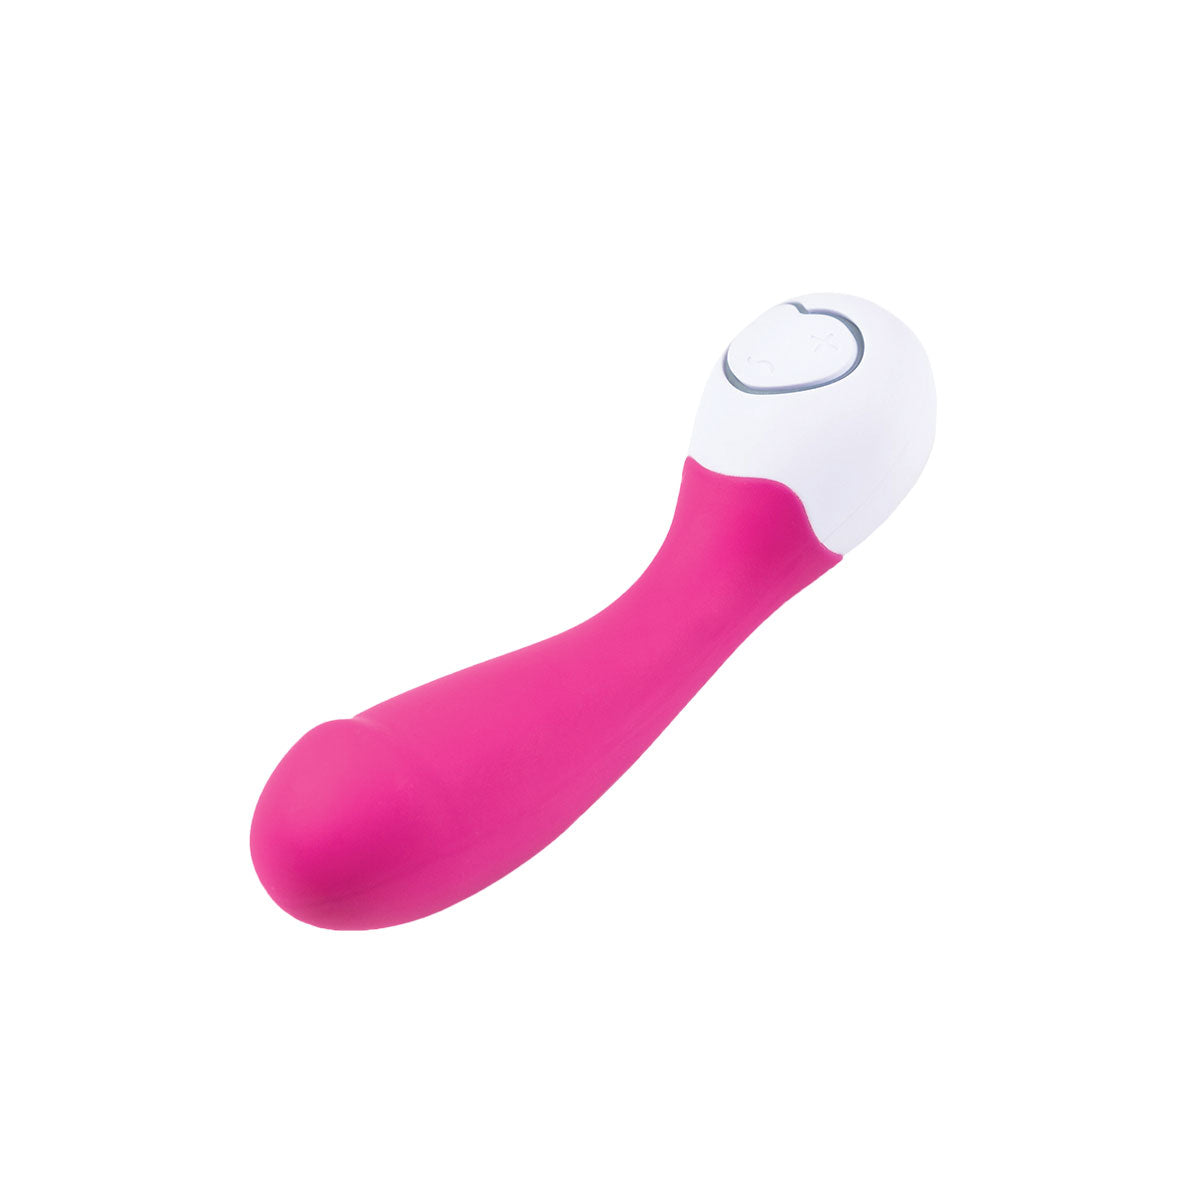 Lovelife Cuddle Mini G-Spot Vibrator by OhMiBod Pink